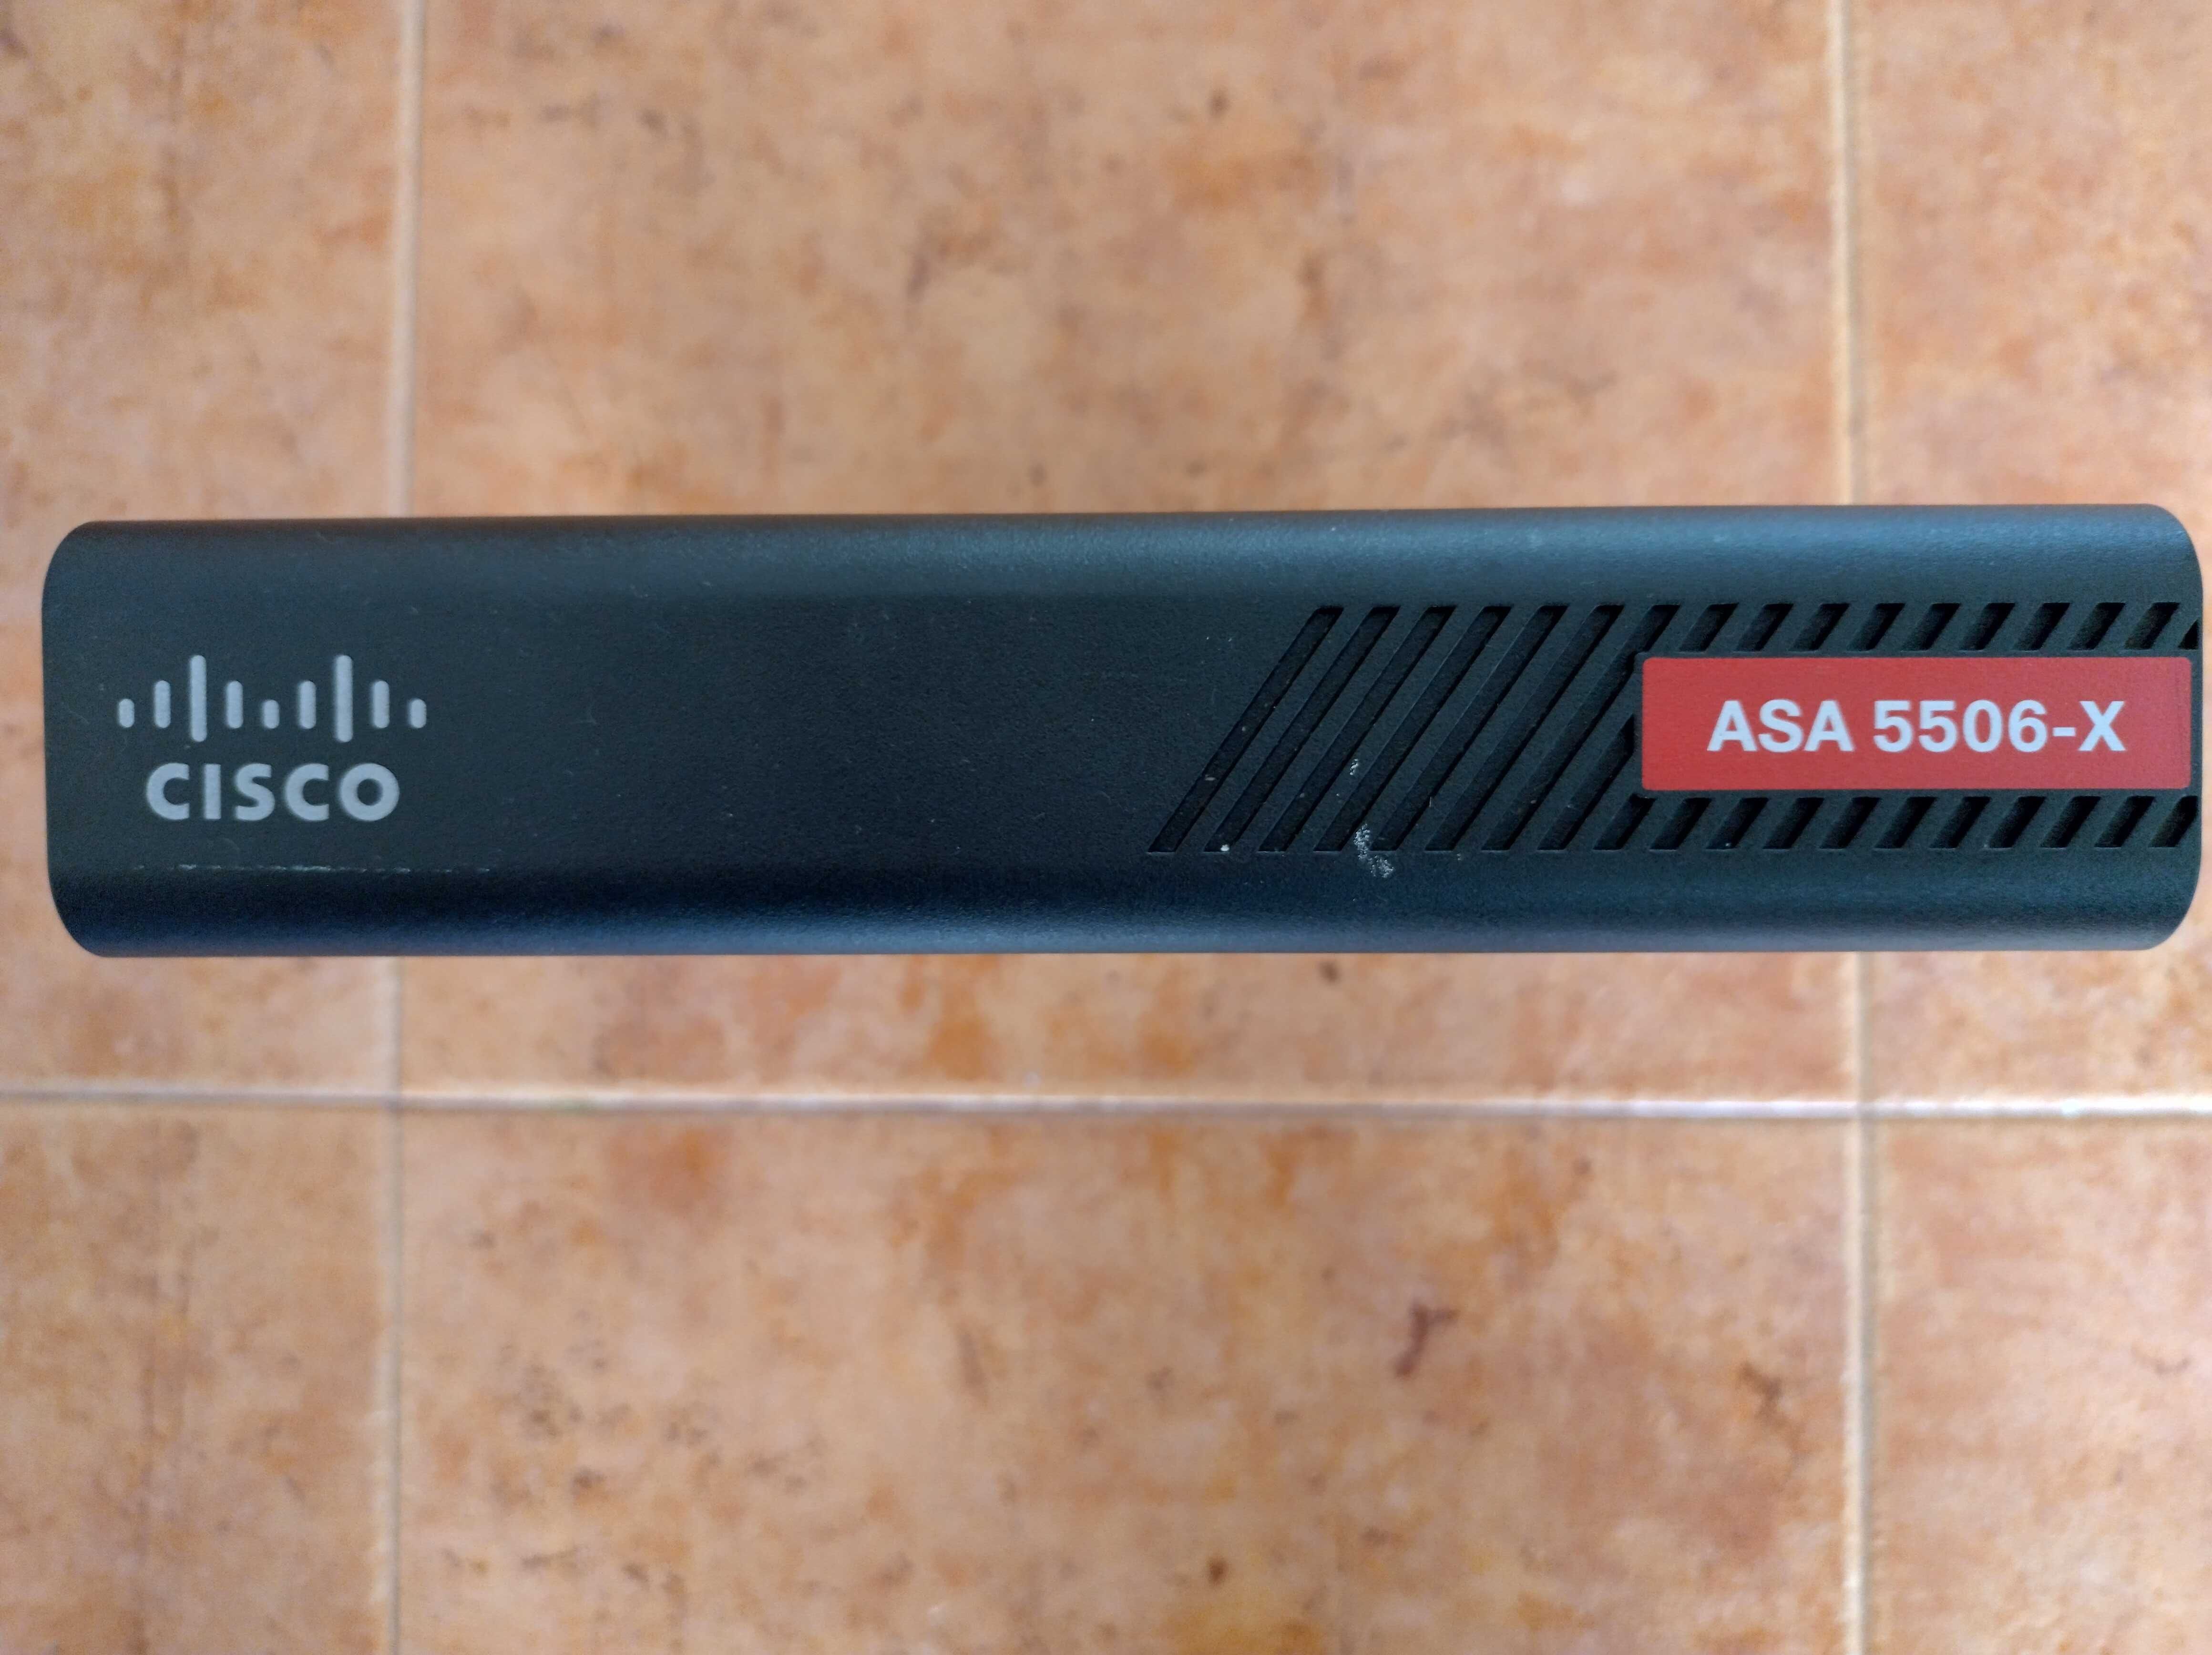 Cisco ASA 5506, v04, 8GB SSD, 4GB RAM